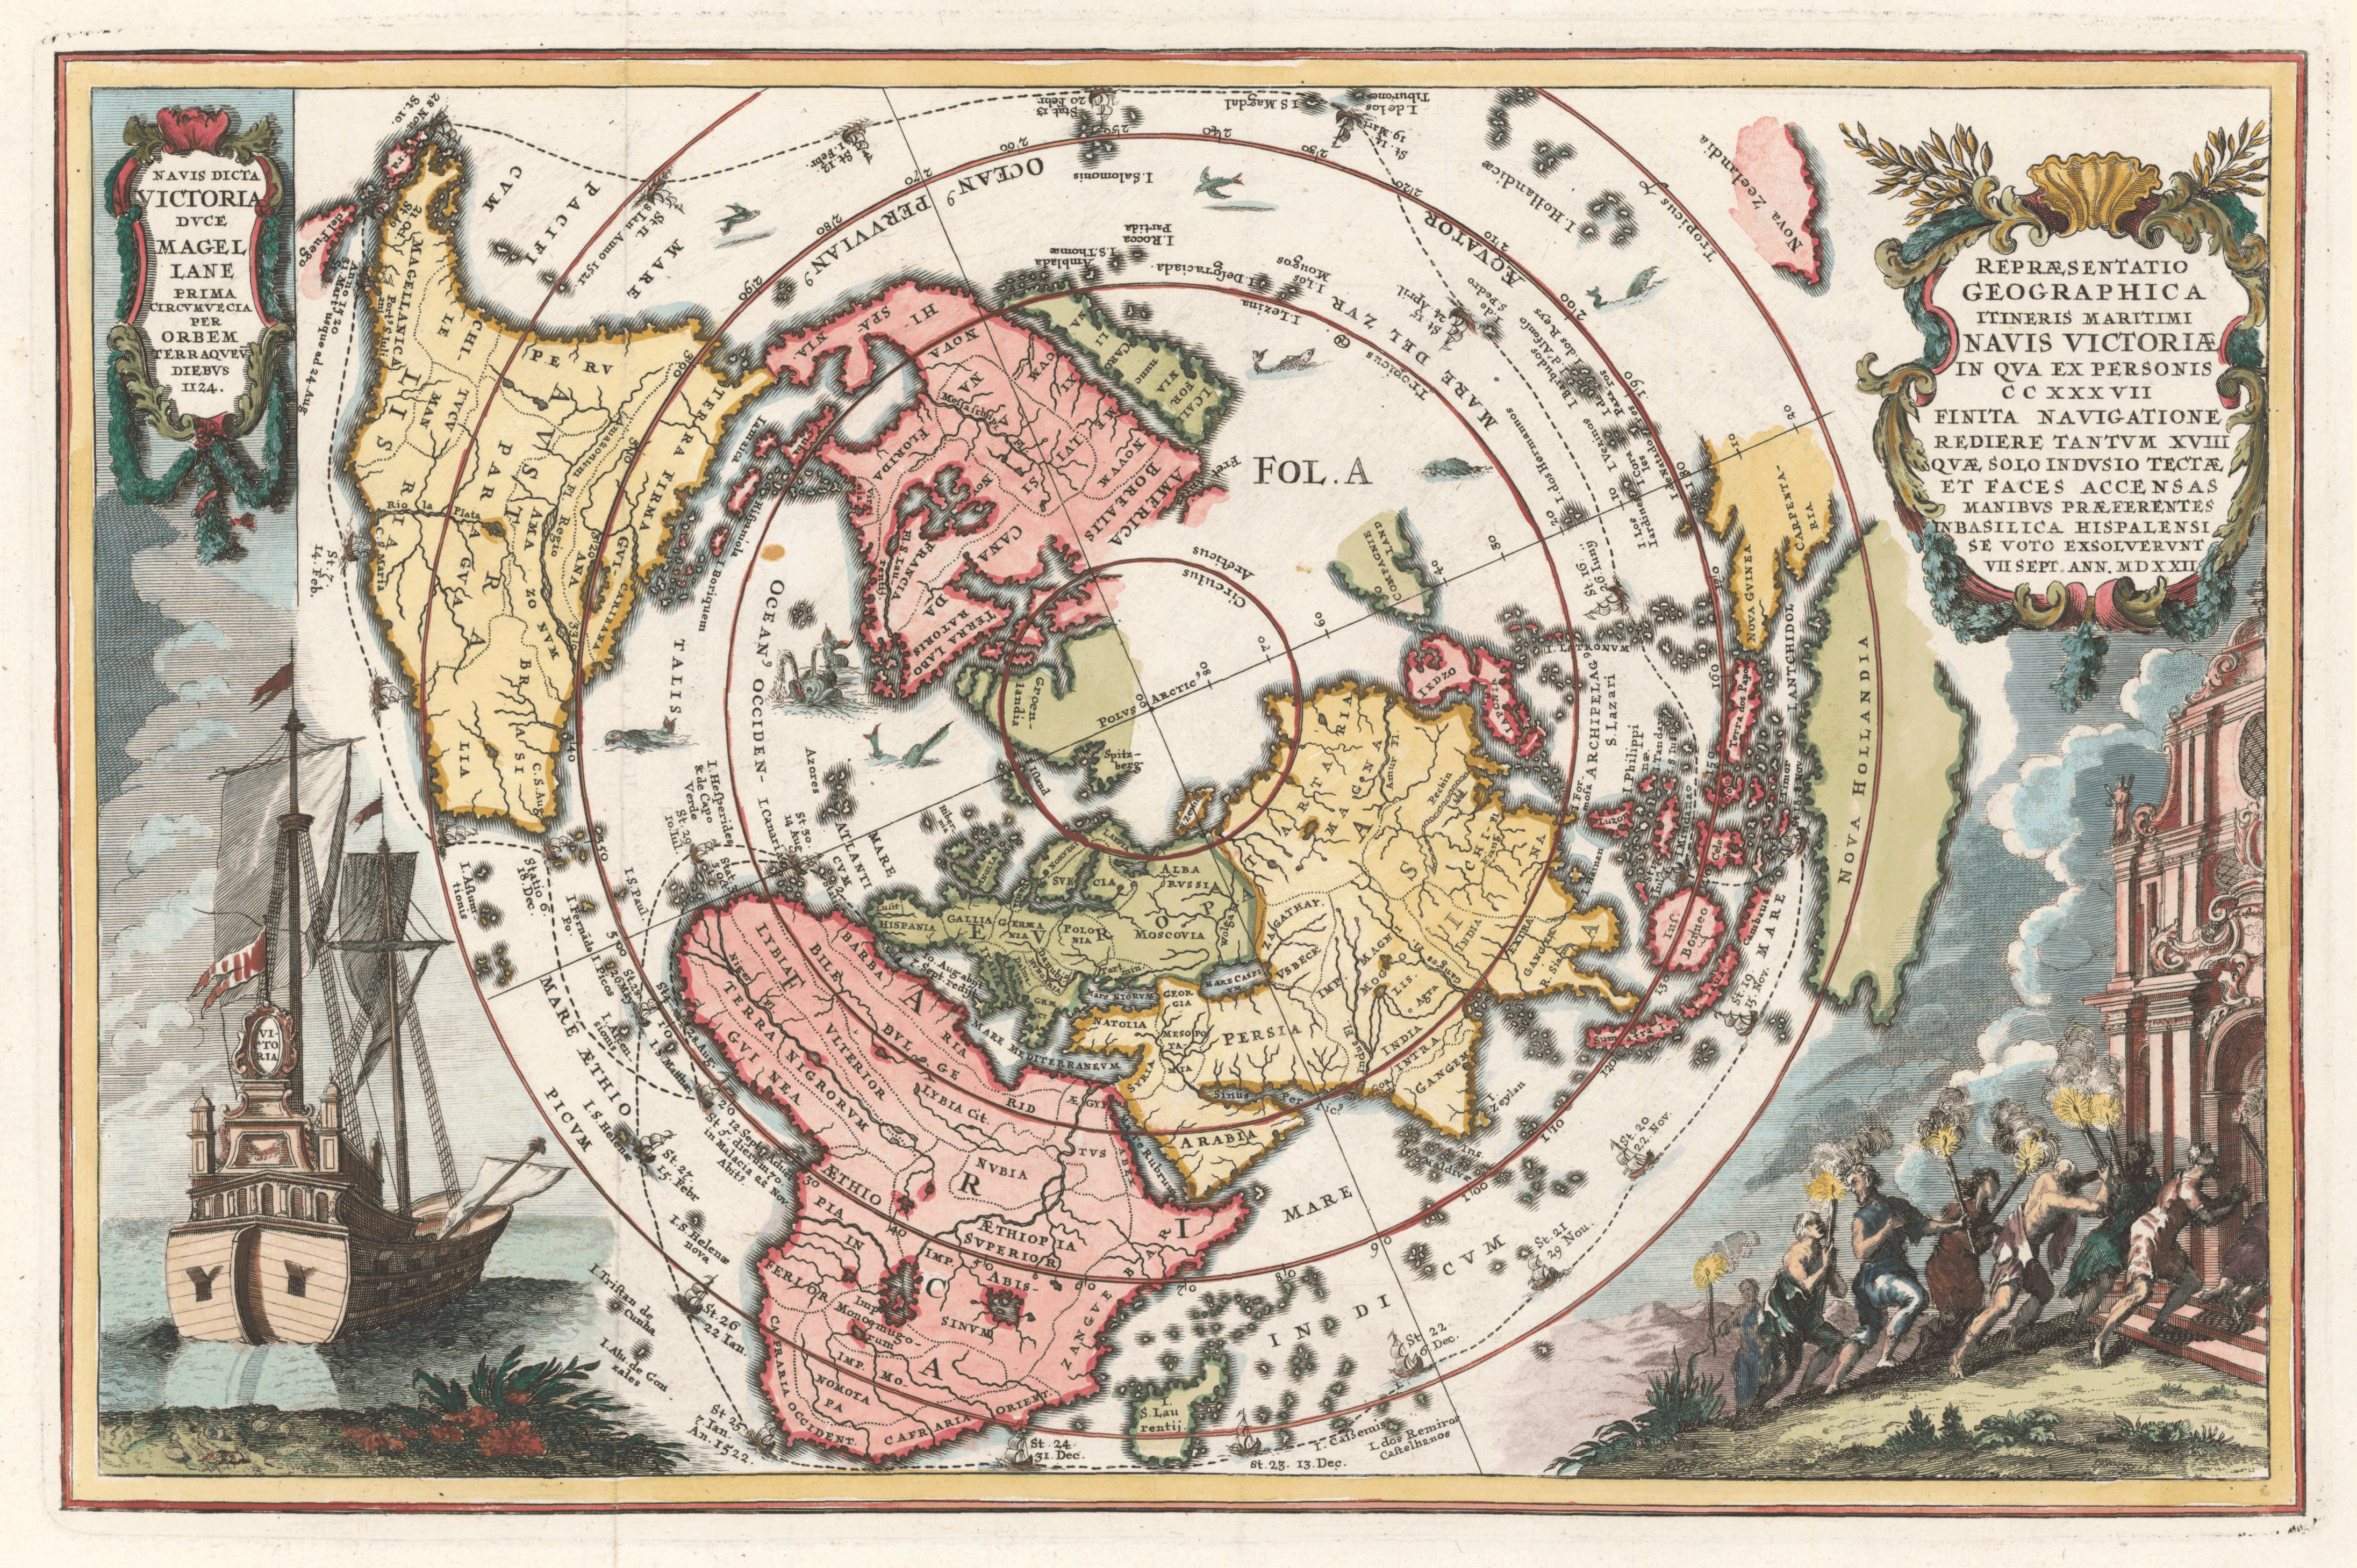 https://libweb5.princeton.edu/visual_materials/maps/websites/pacific/magellan/map-world-magellan-scherer-1700.jpg